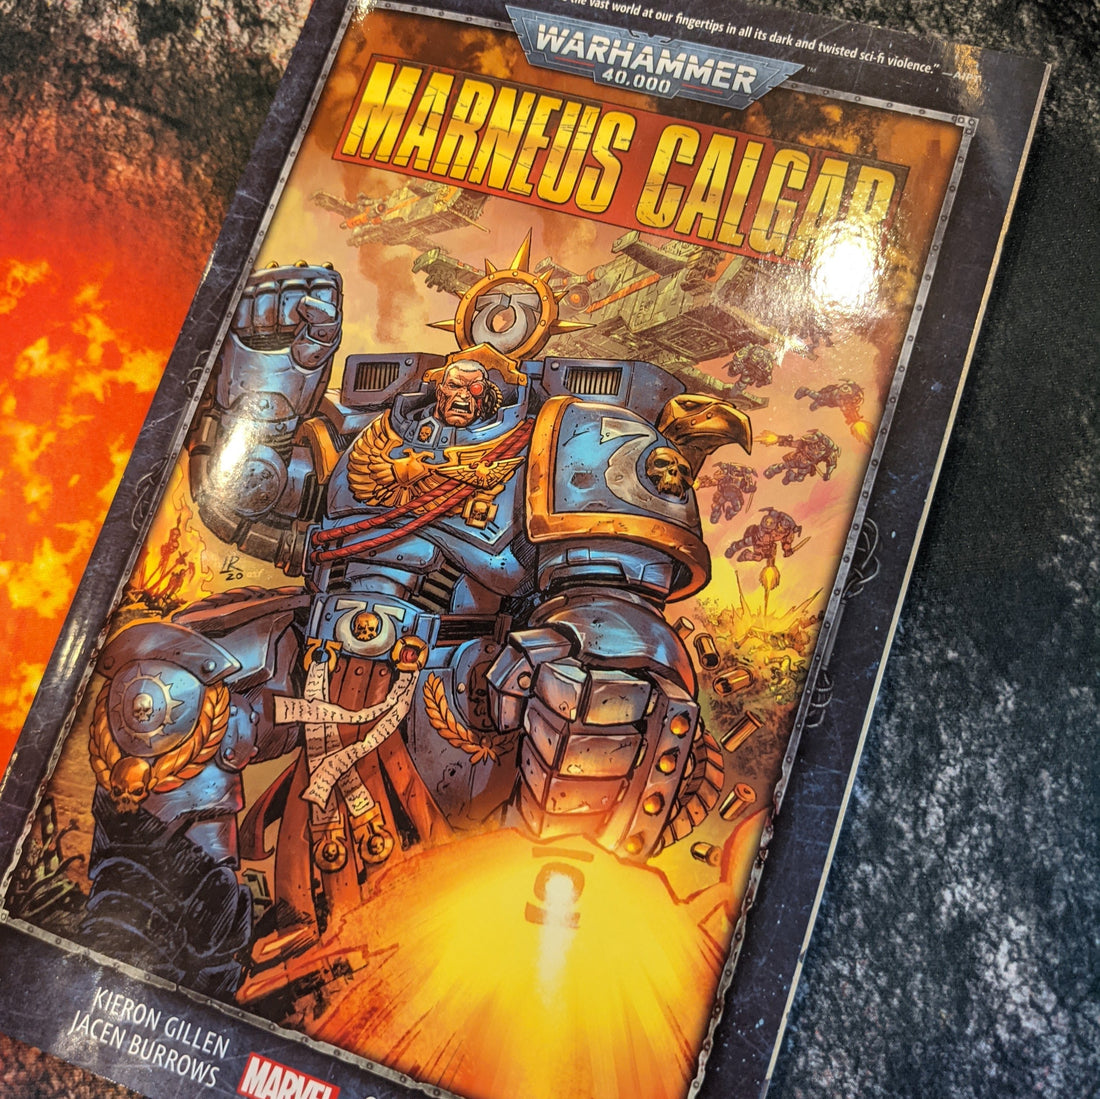 Warhammer 40,000: Marneus Calgar by Marvel Comics